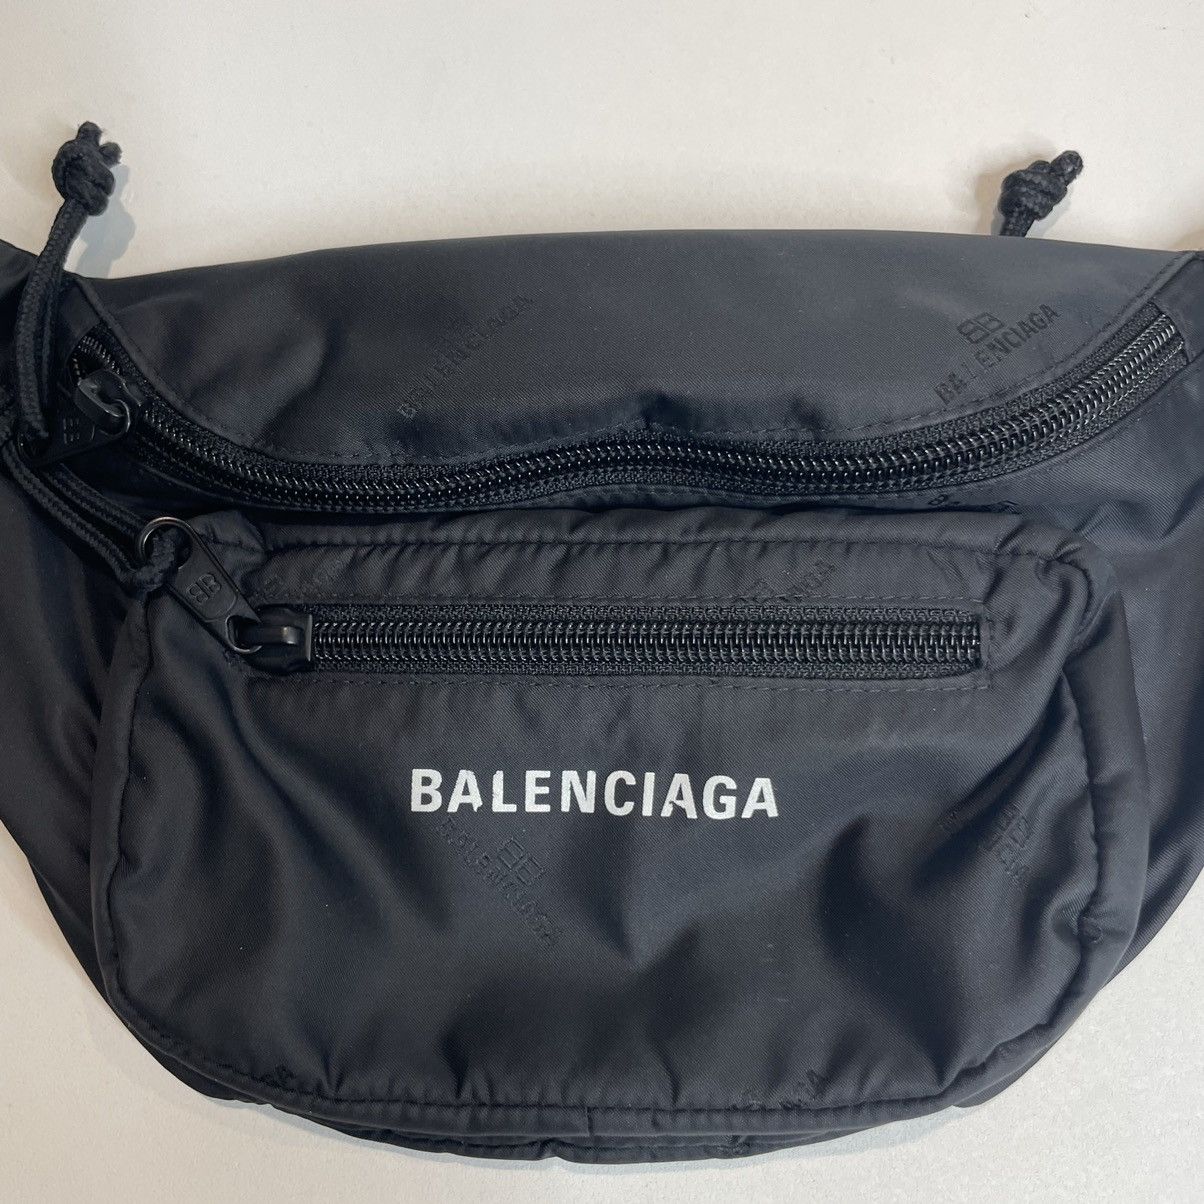 Balenciaga Balenciaga Beltpack Fanny Pack Size ONE SIZE - 2 Preview